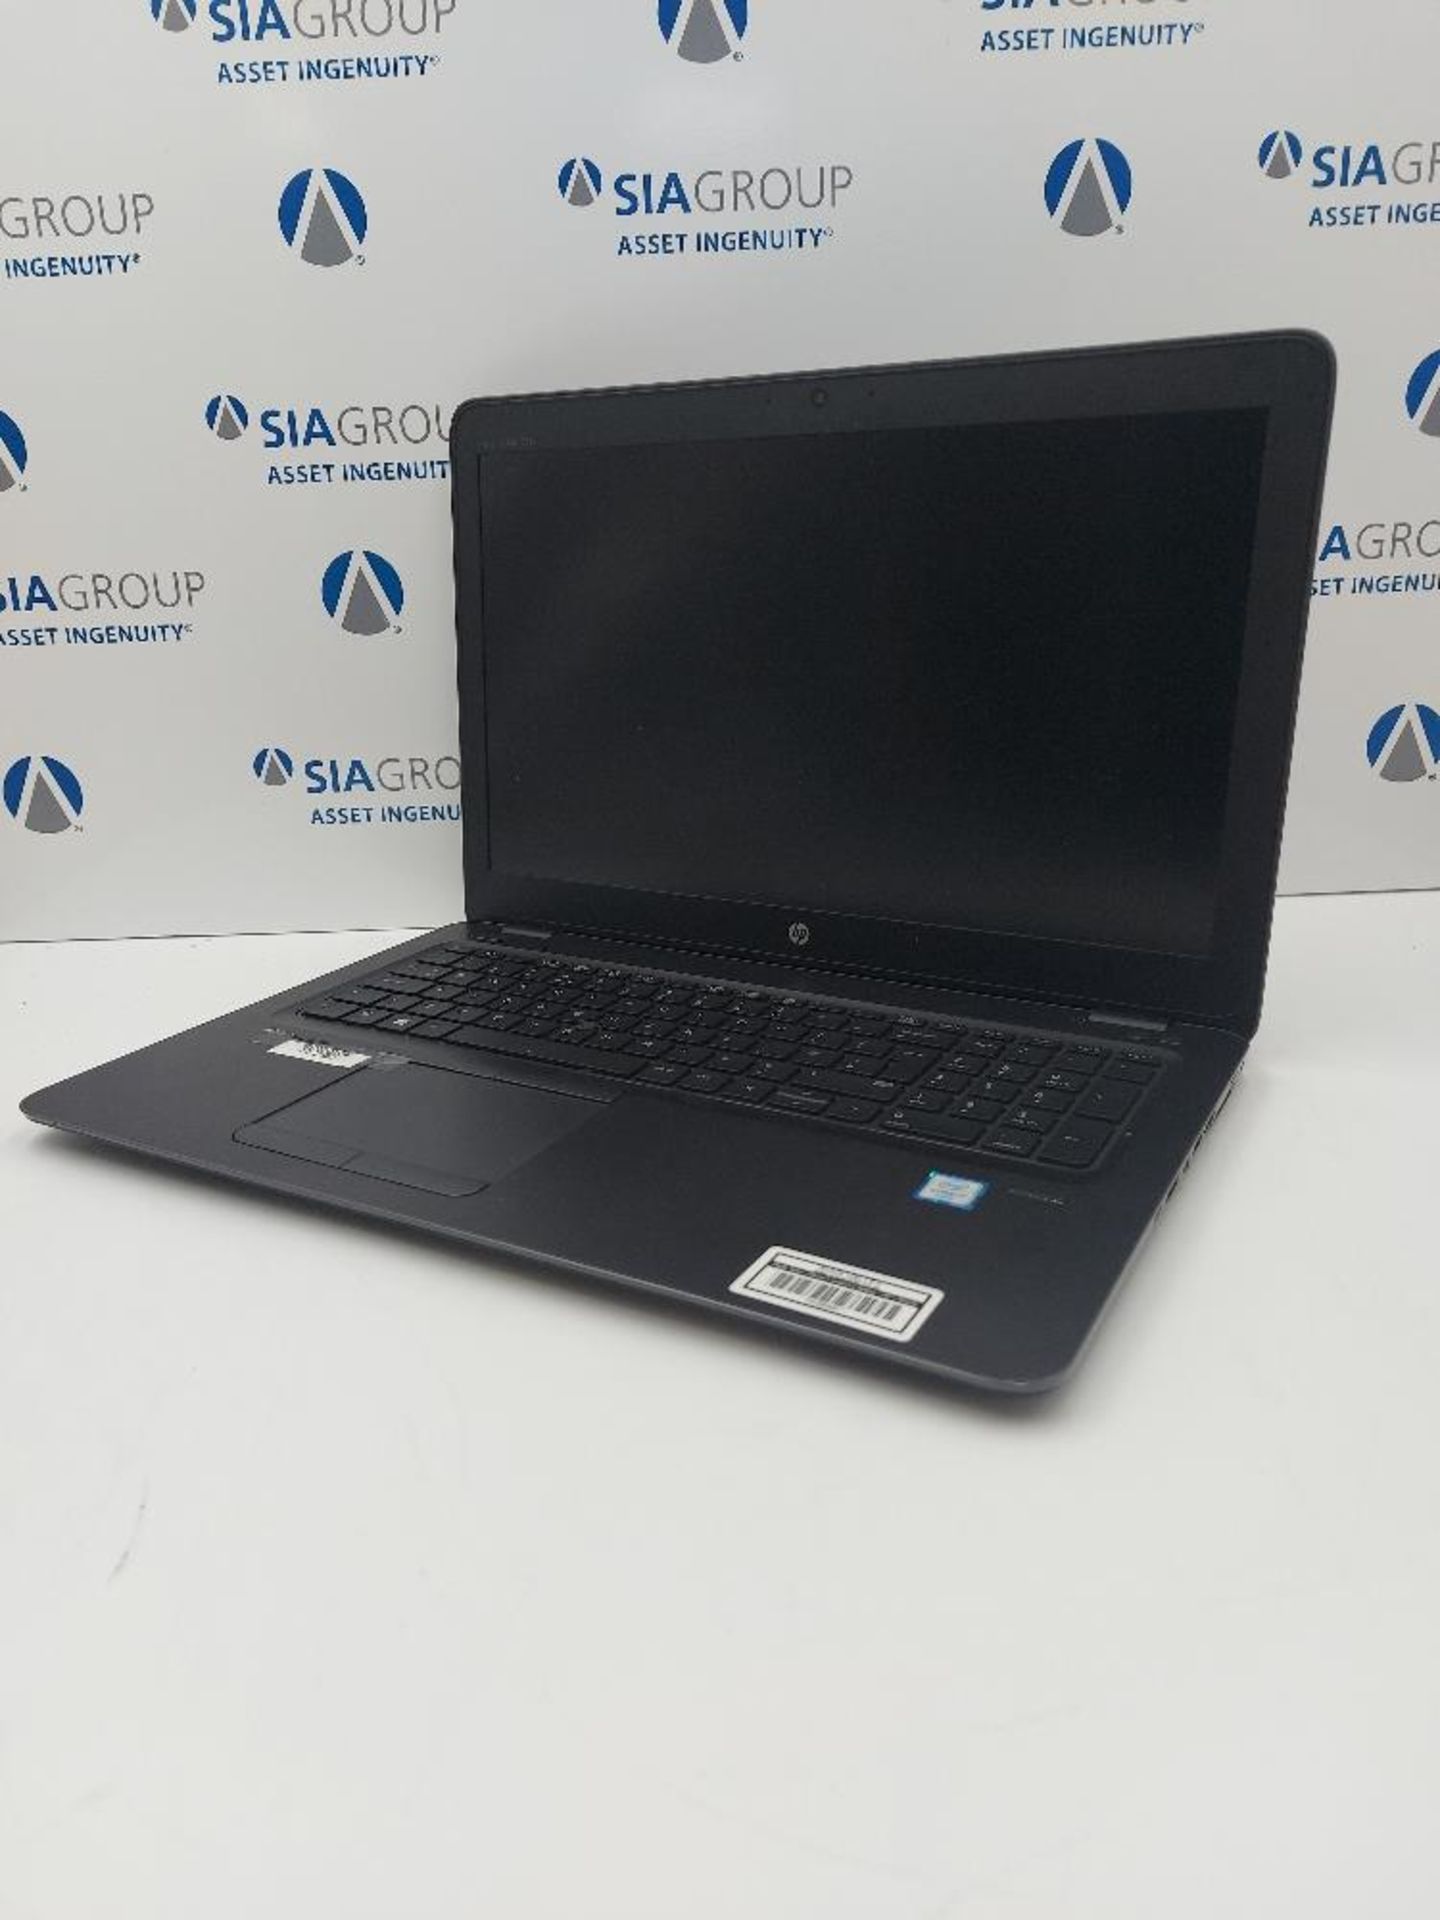 HP Zbook 15u G3 Laptop with Flight Case - Image 2 of 7